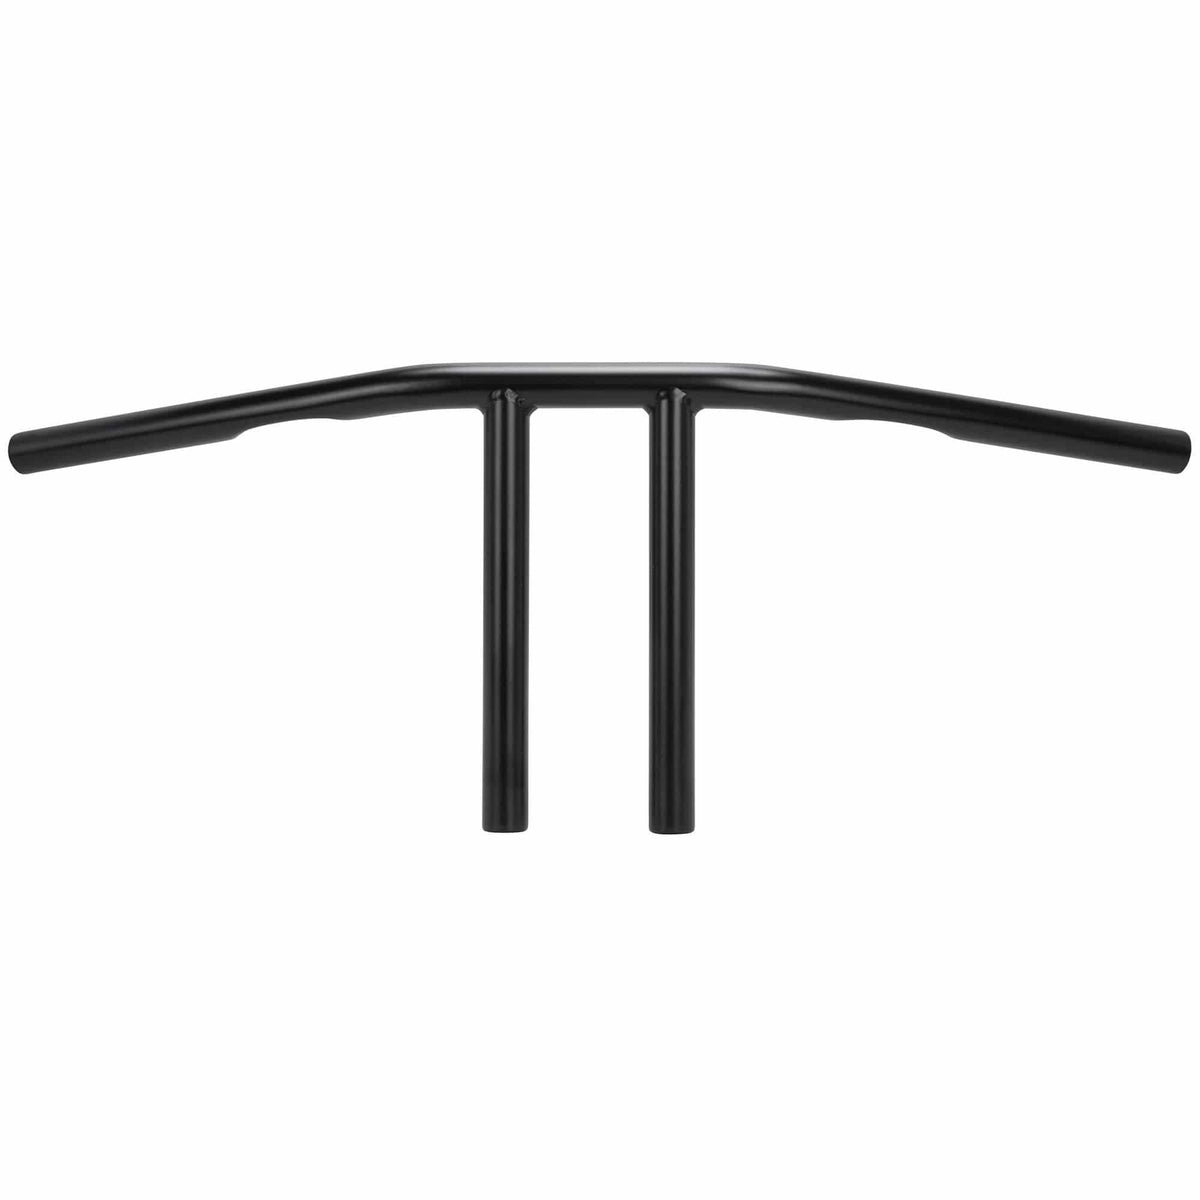 Lowbrow Customs T-Bars Handlebars 10 inch Rise inch Black